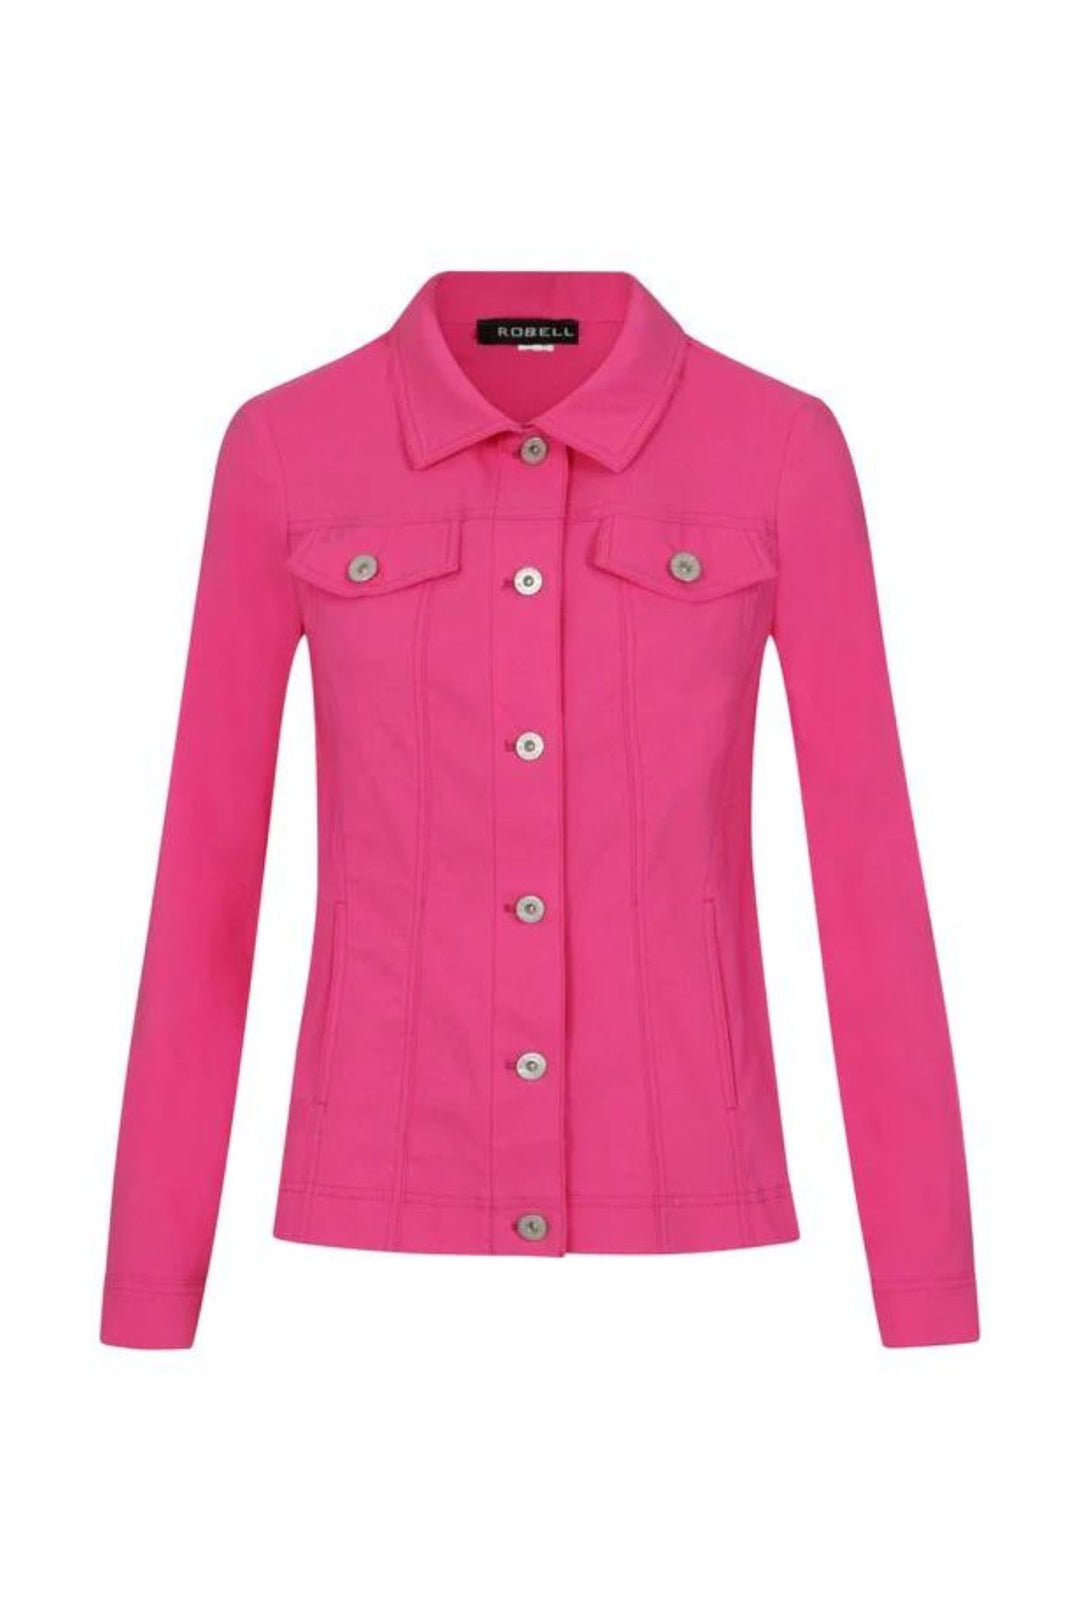 Robell Happy 57609-5499 Fuchsia Pink Stretch Bengaline Jacket